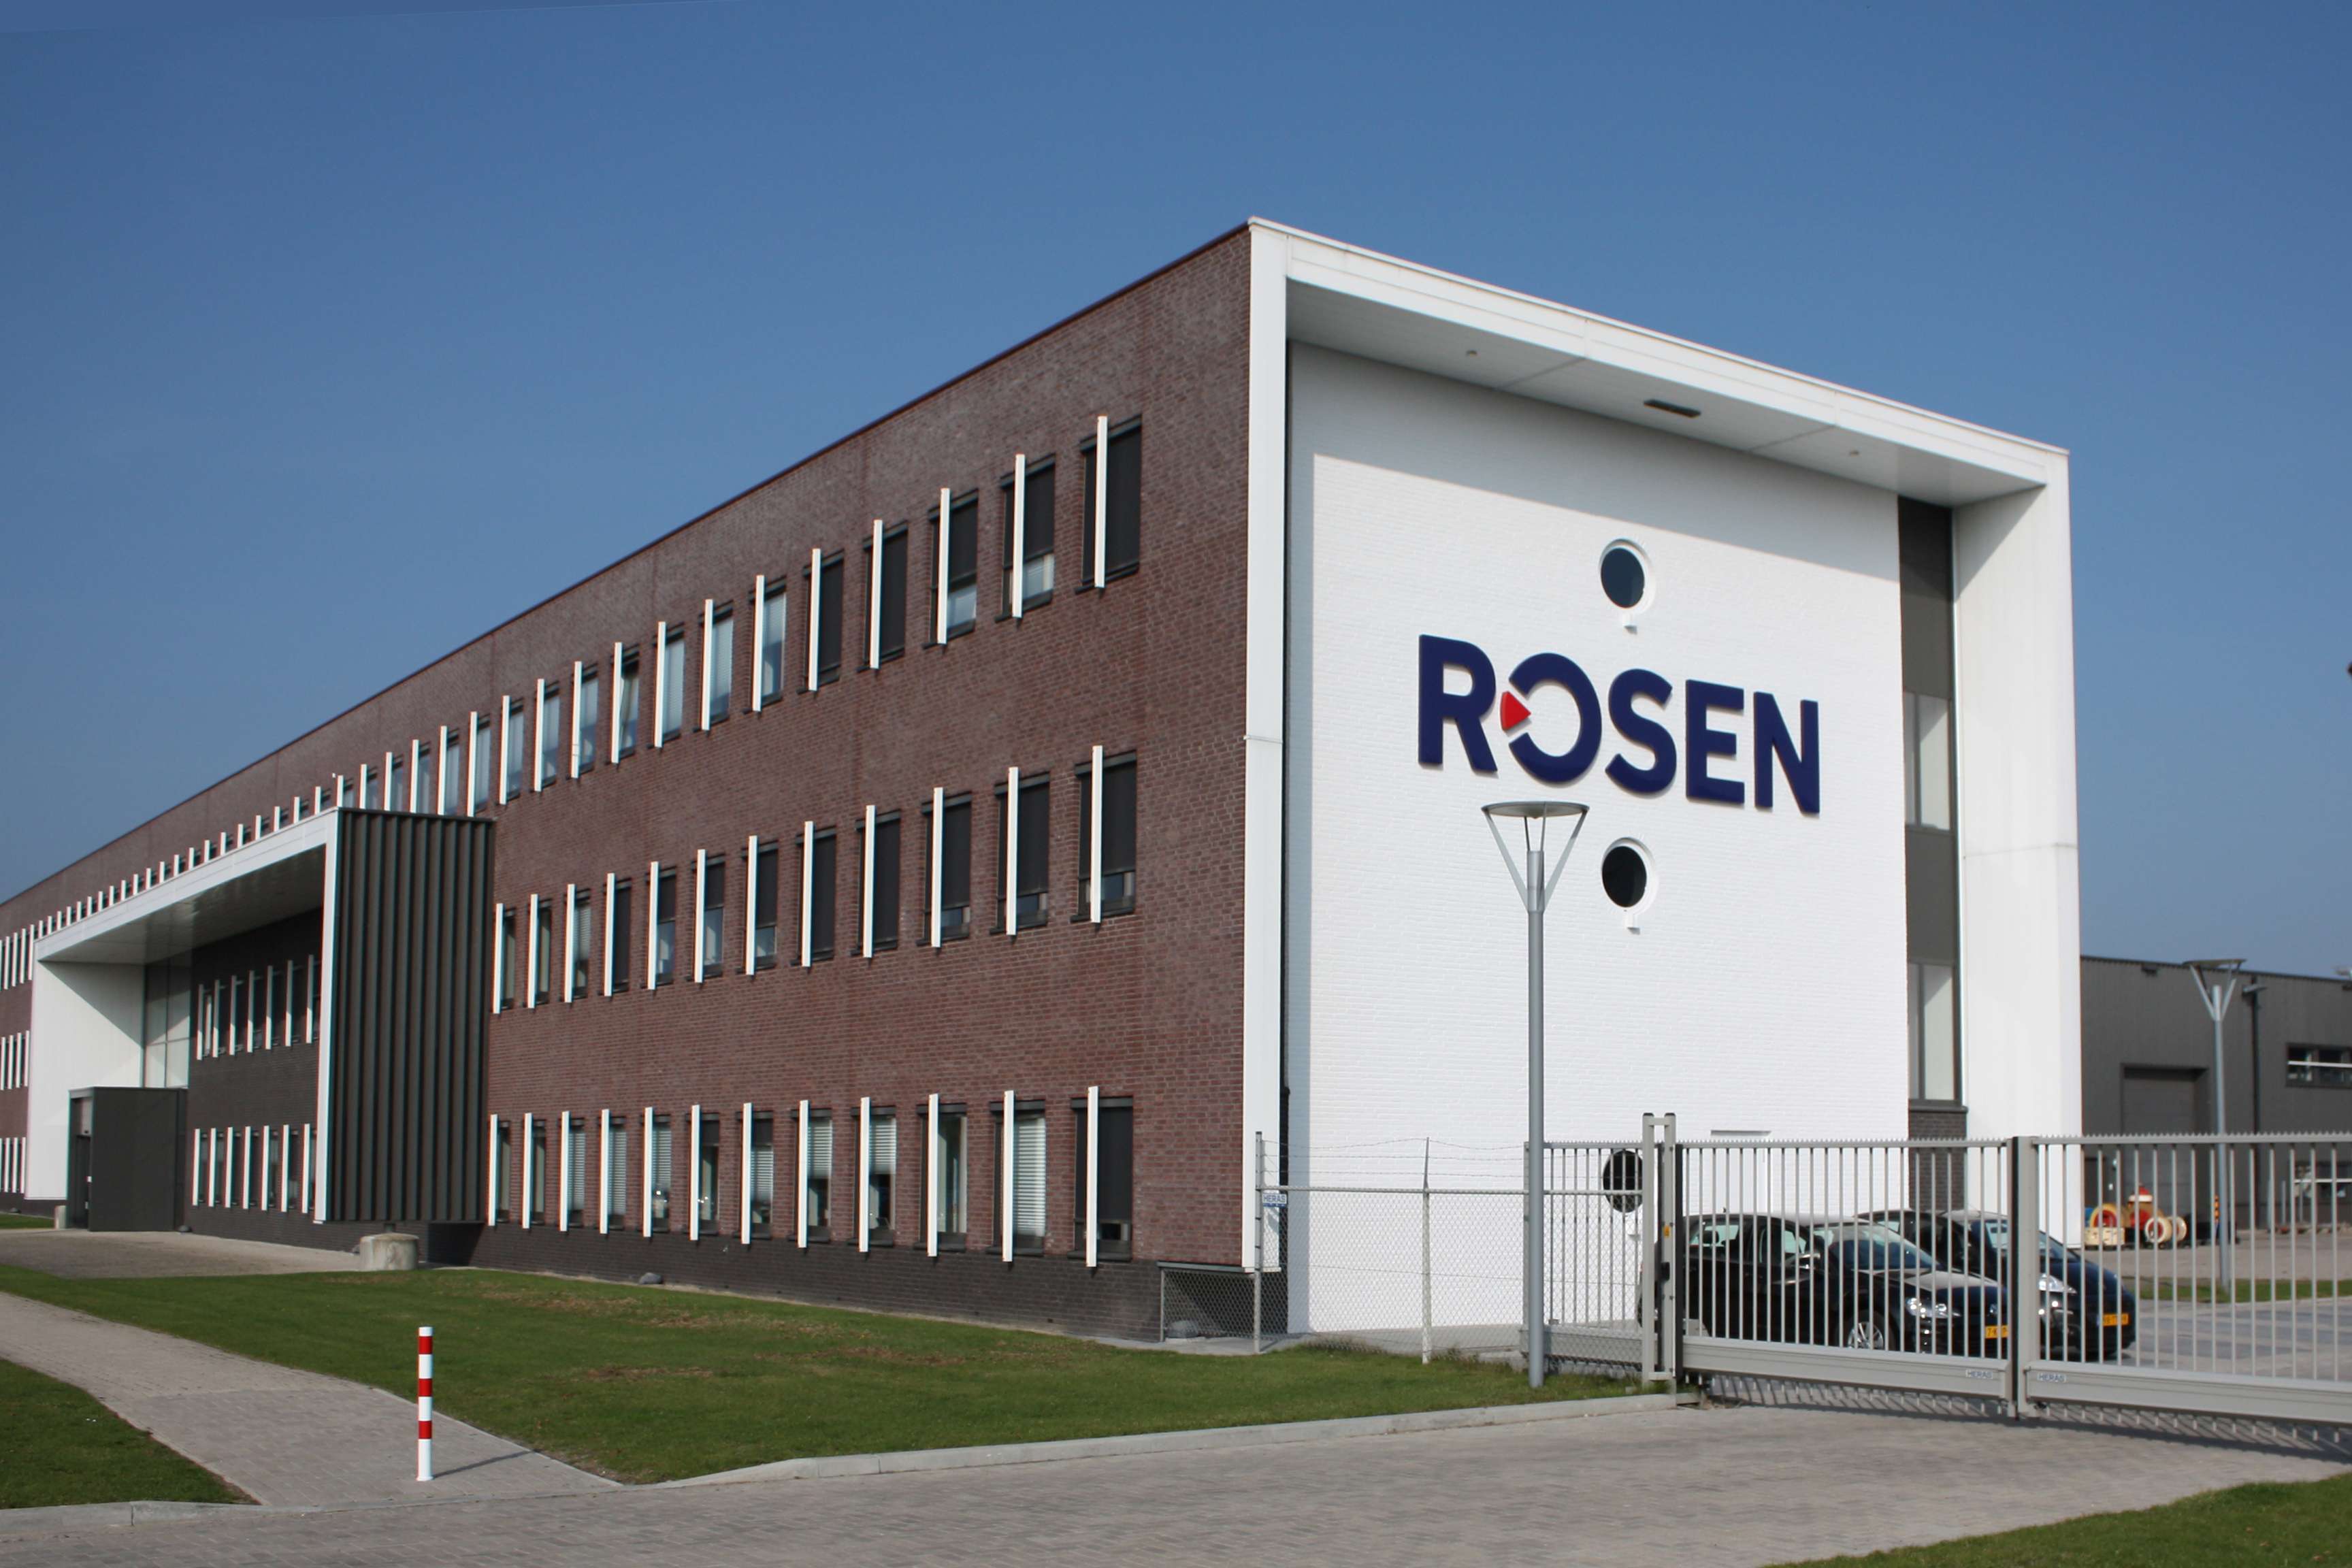 ROSEN location in Oldenzaal, the Netherlands.